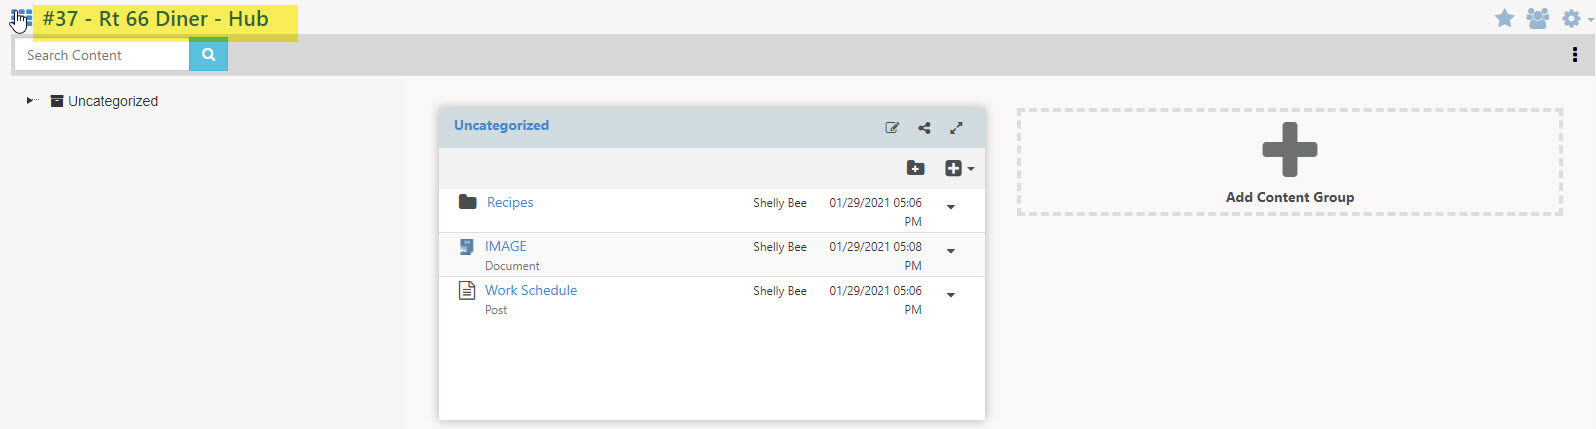 Customer Hub showing folders, documents, and posts